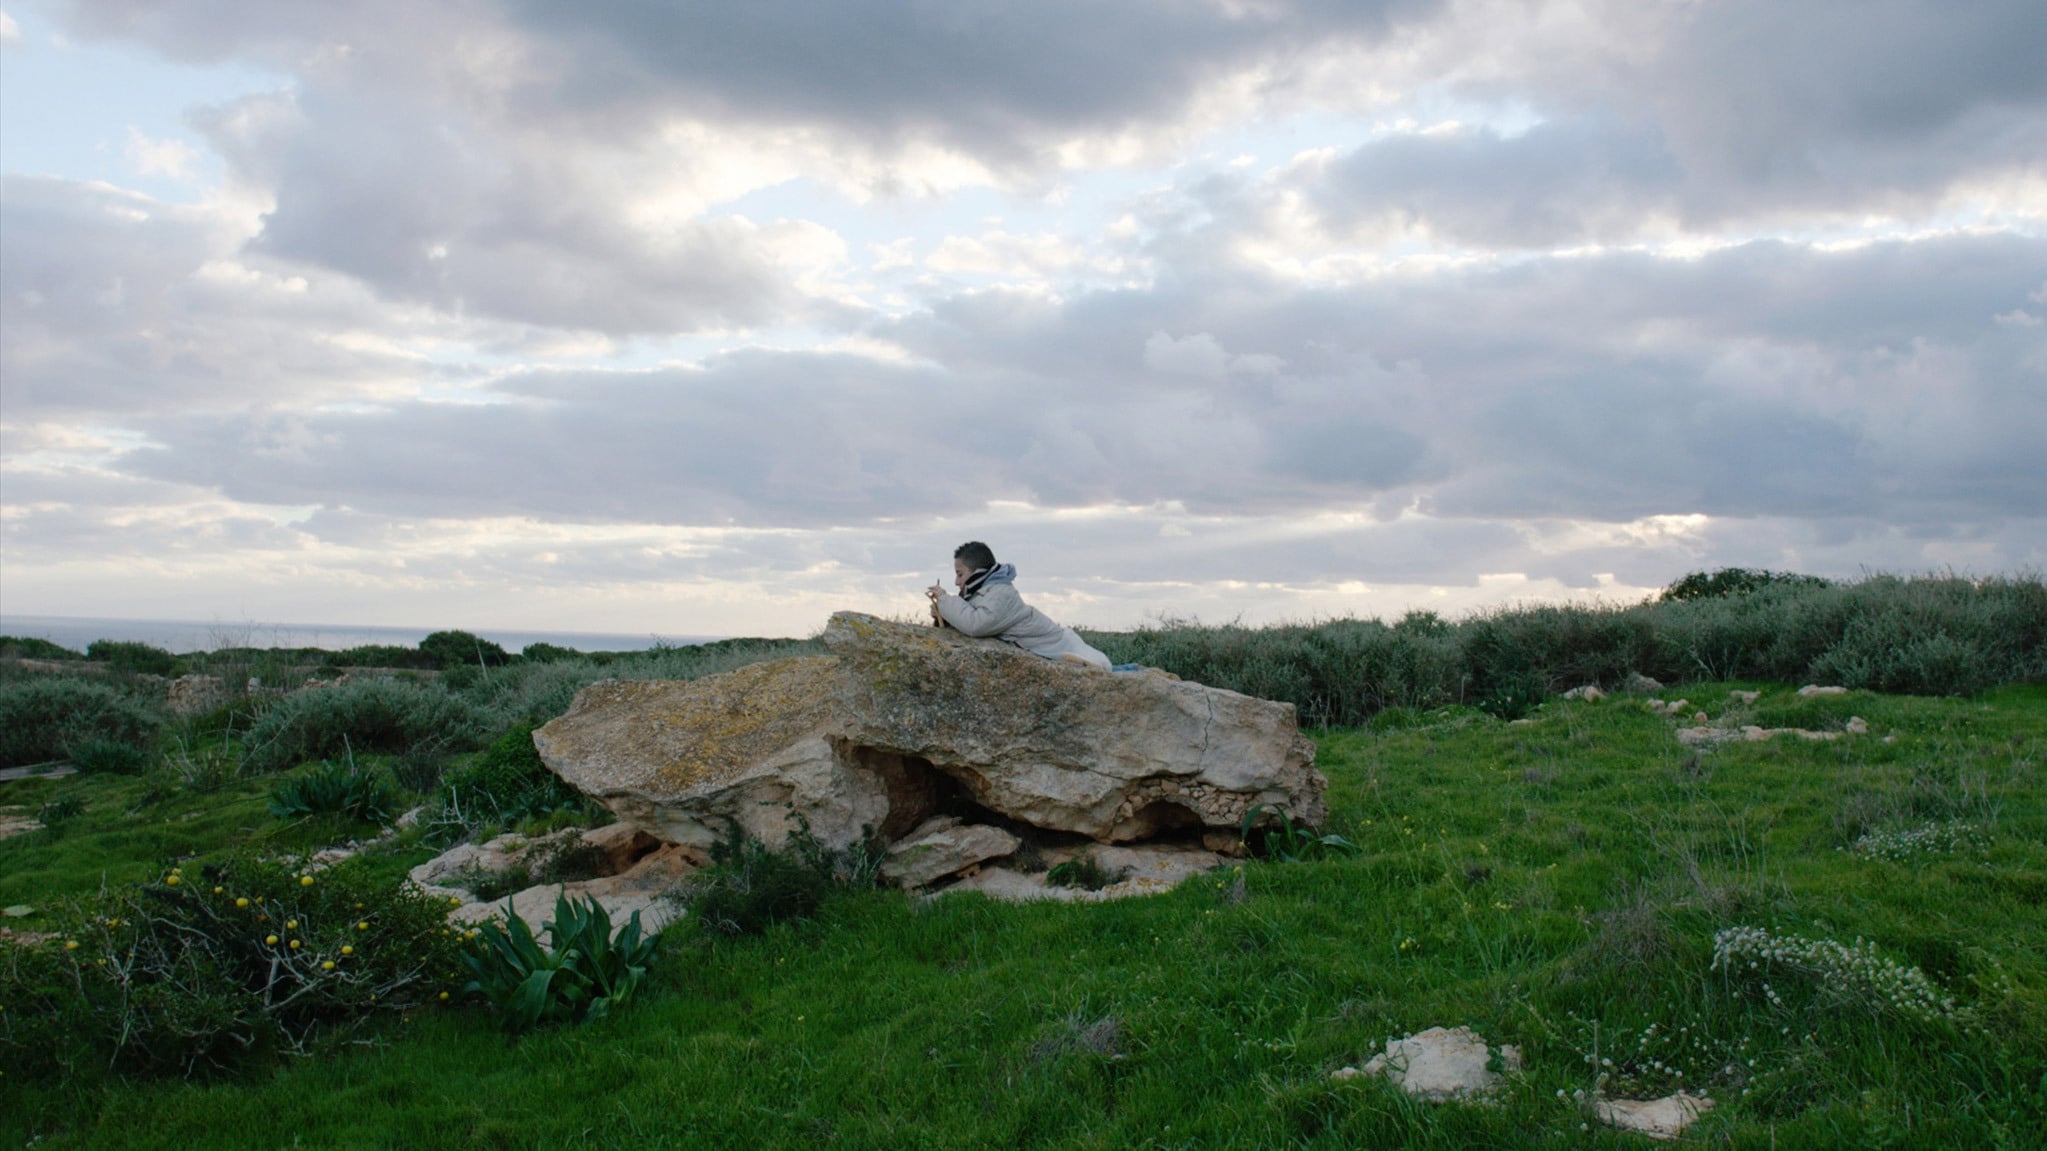 Image du film Fuocoammare, par-delà Lampedusa nxust5a3xff2af40eziatpspqsfjpg